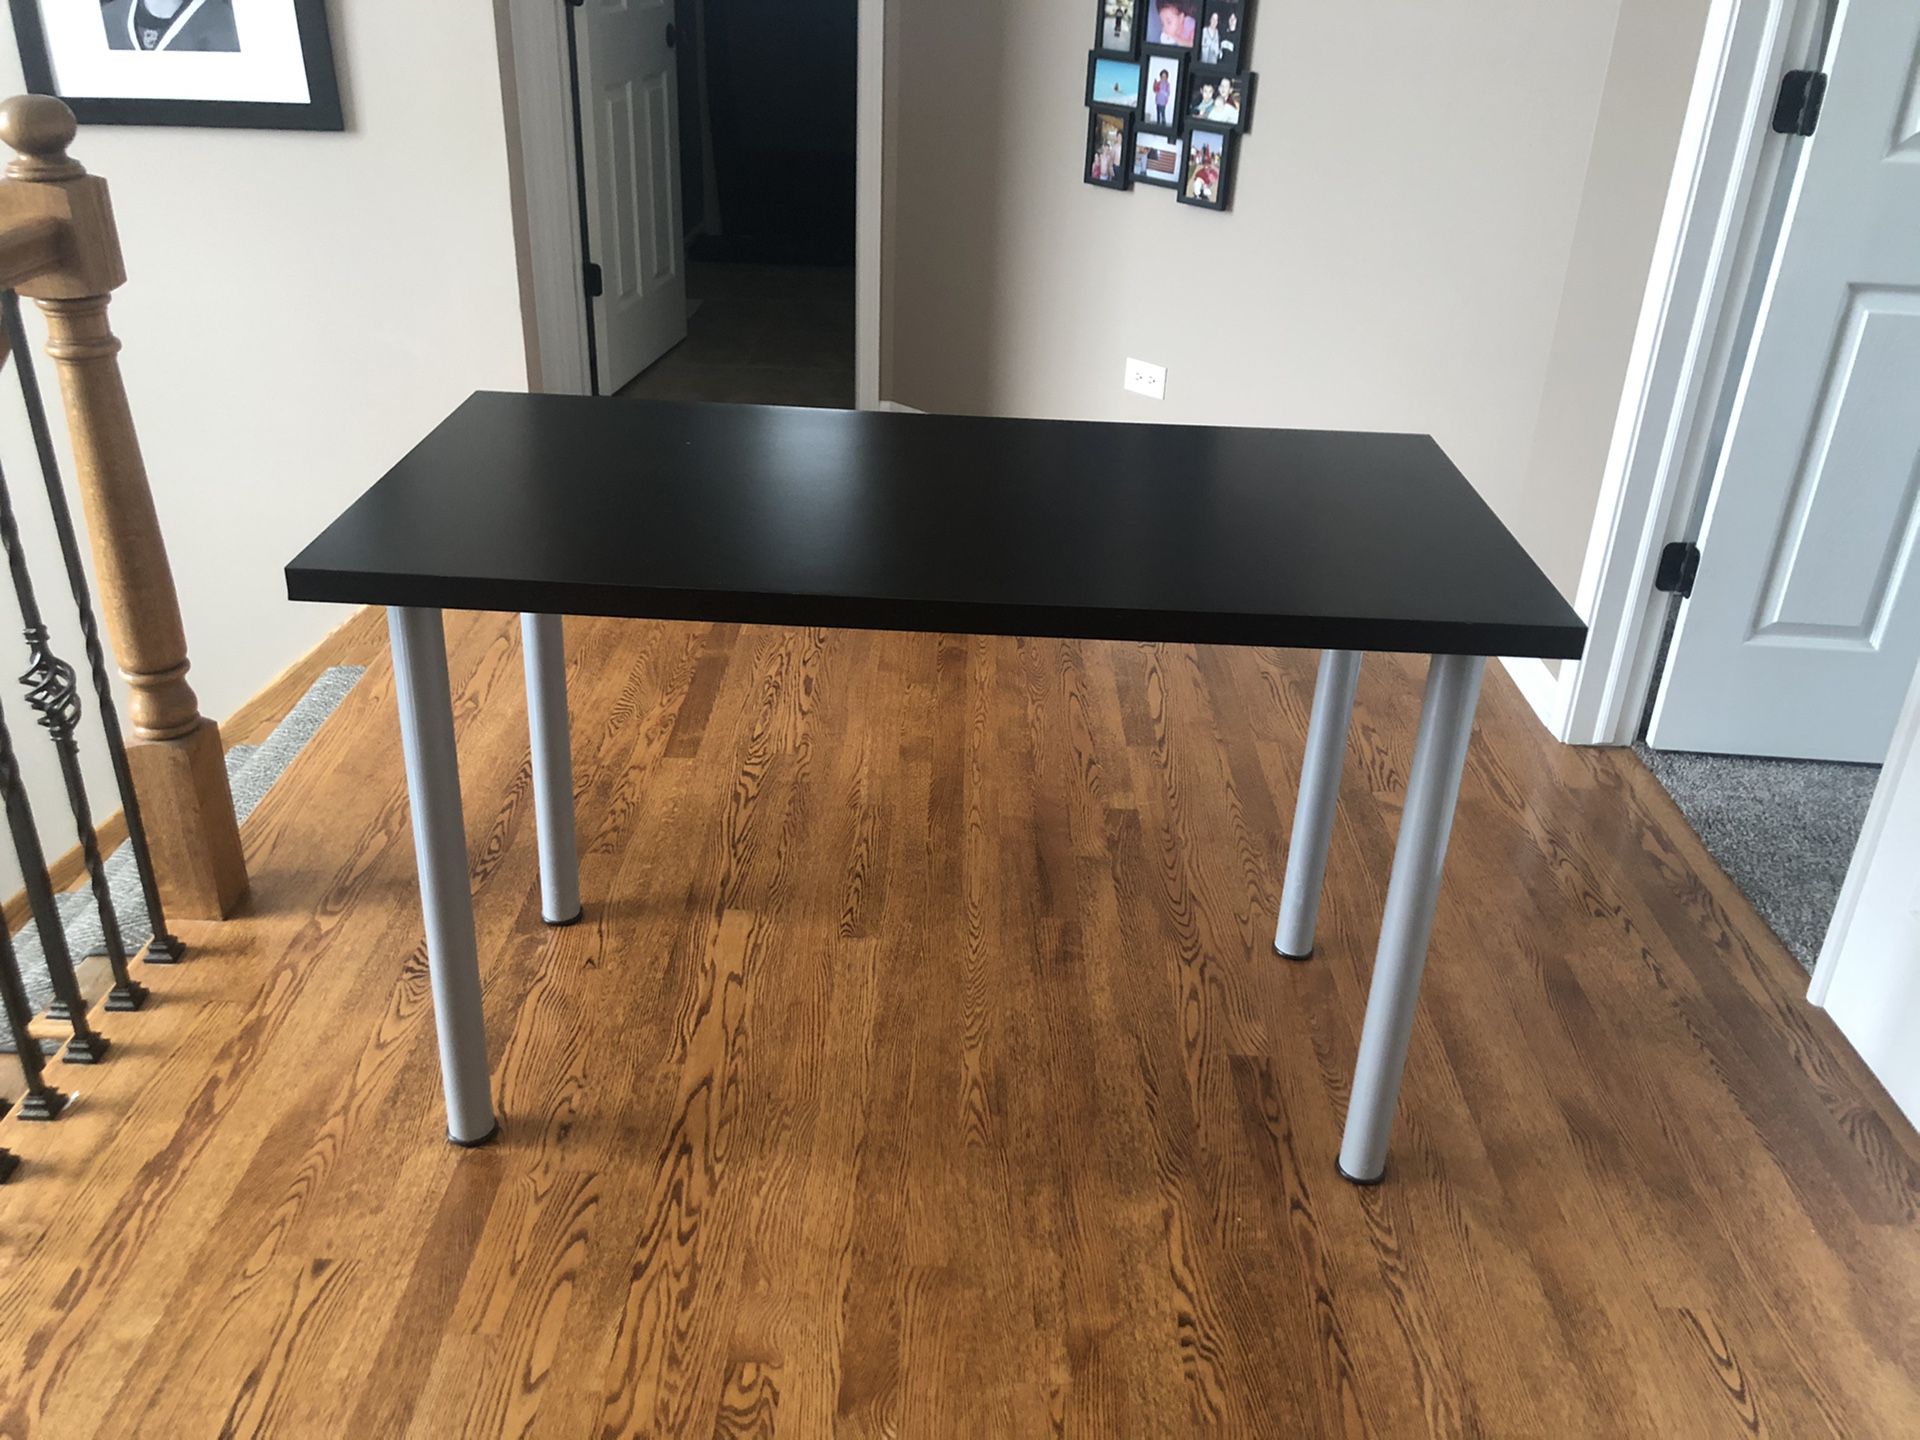 Linnmon Desk Table from IKEA